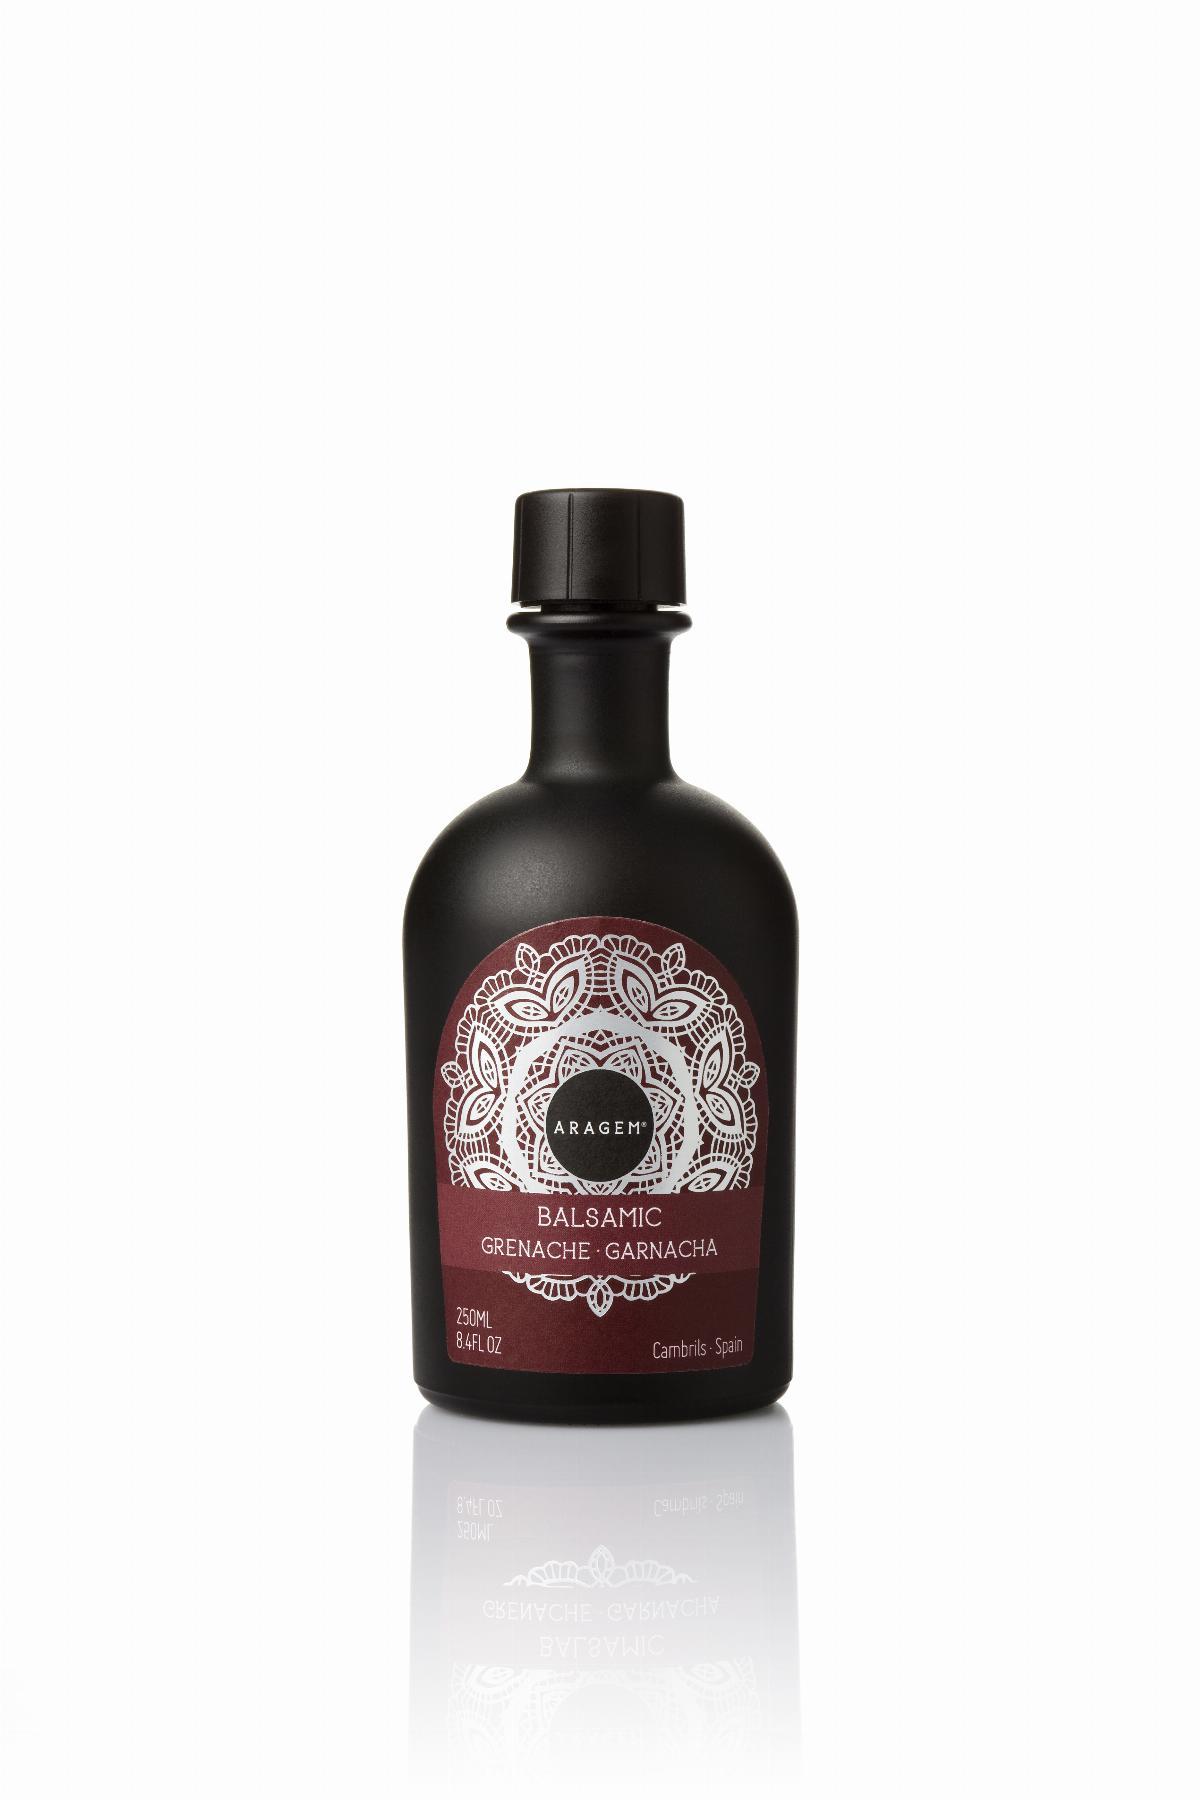 Vinagres - Vinagre Balsámico de Garnacha Aragem, botella negra 250 ml - Mestral Cambrils